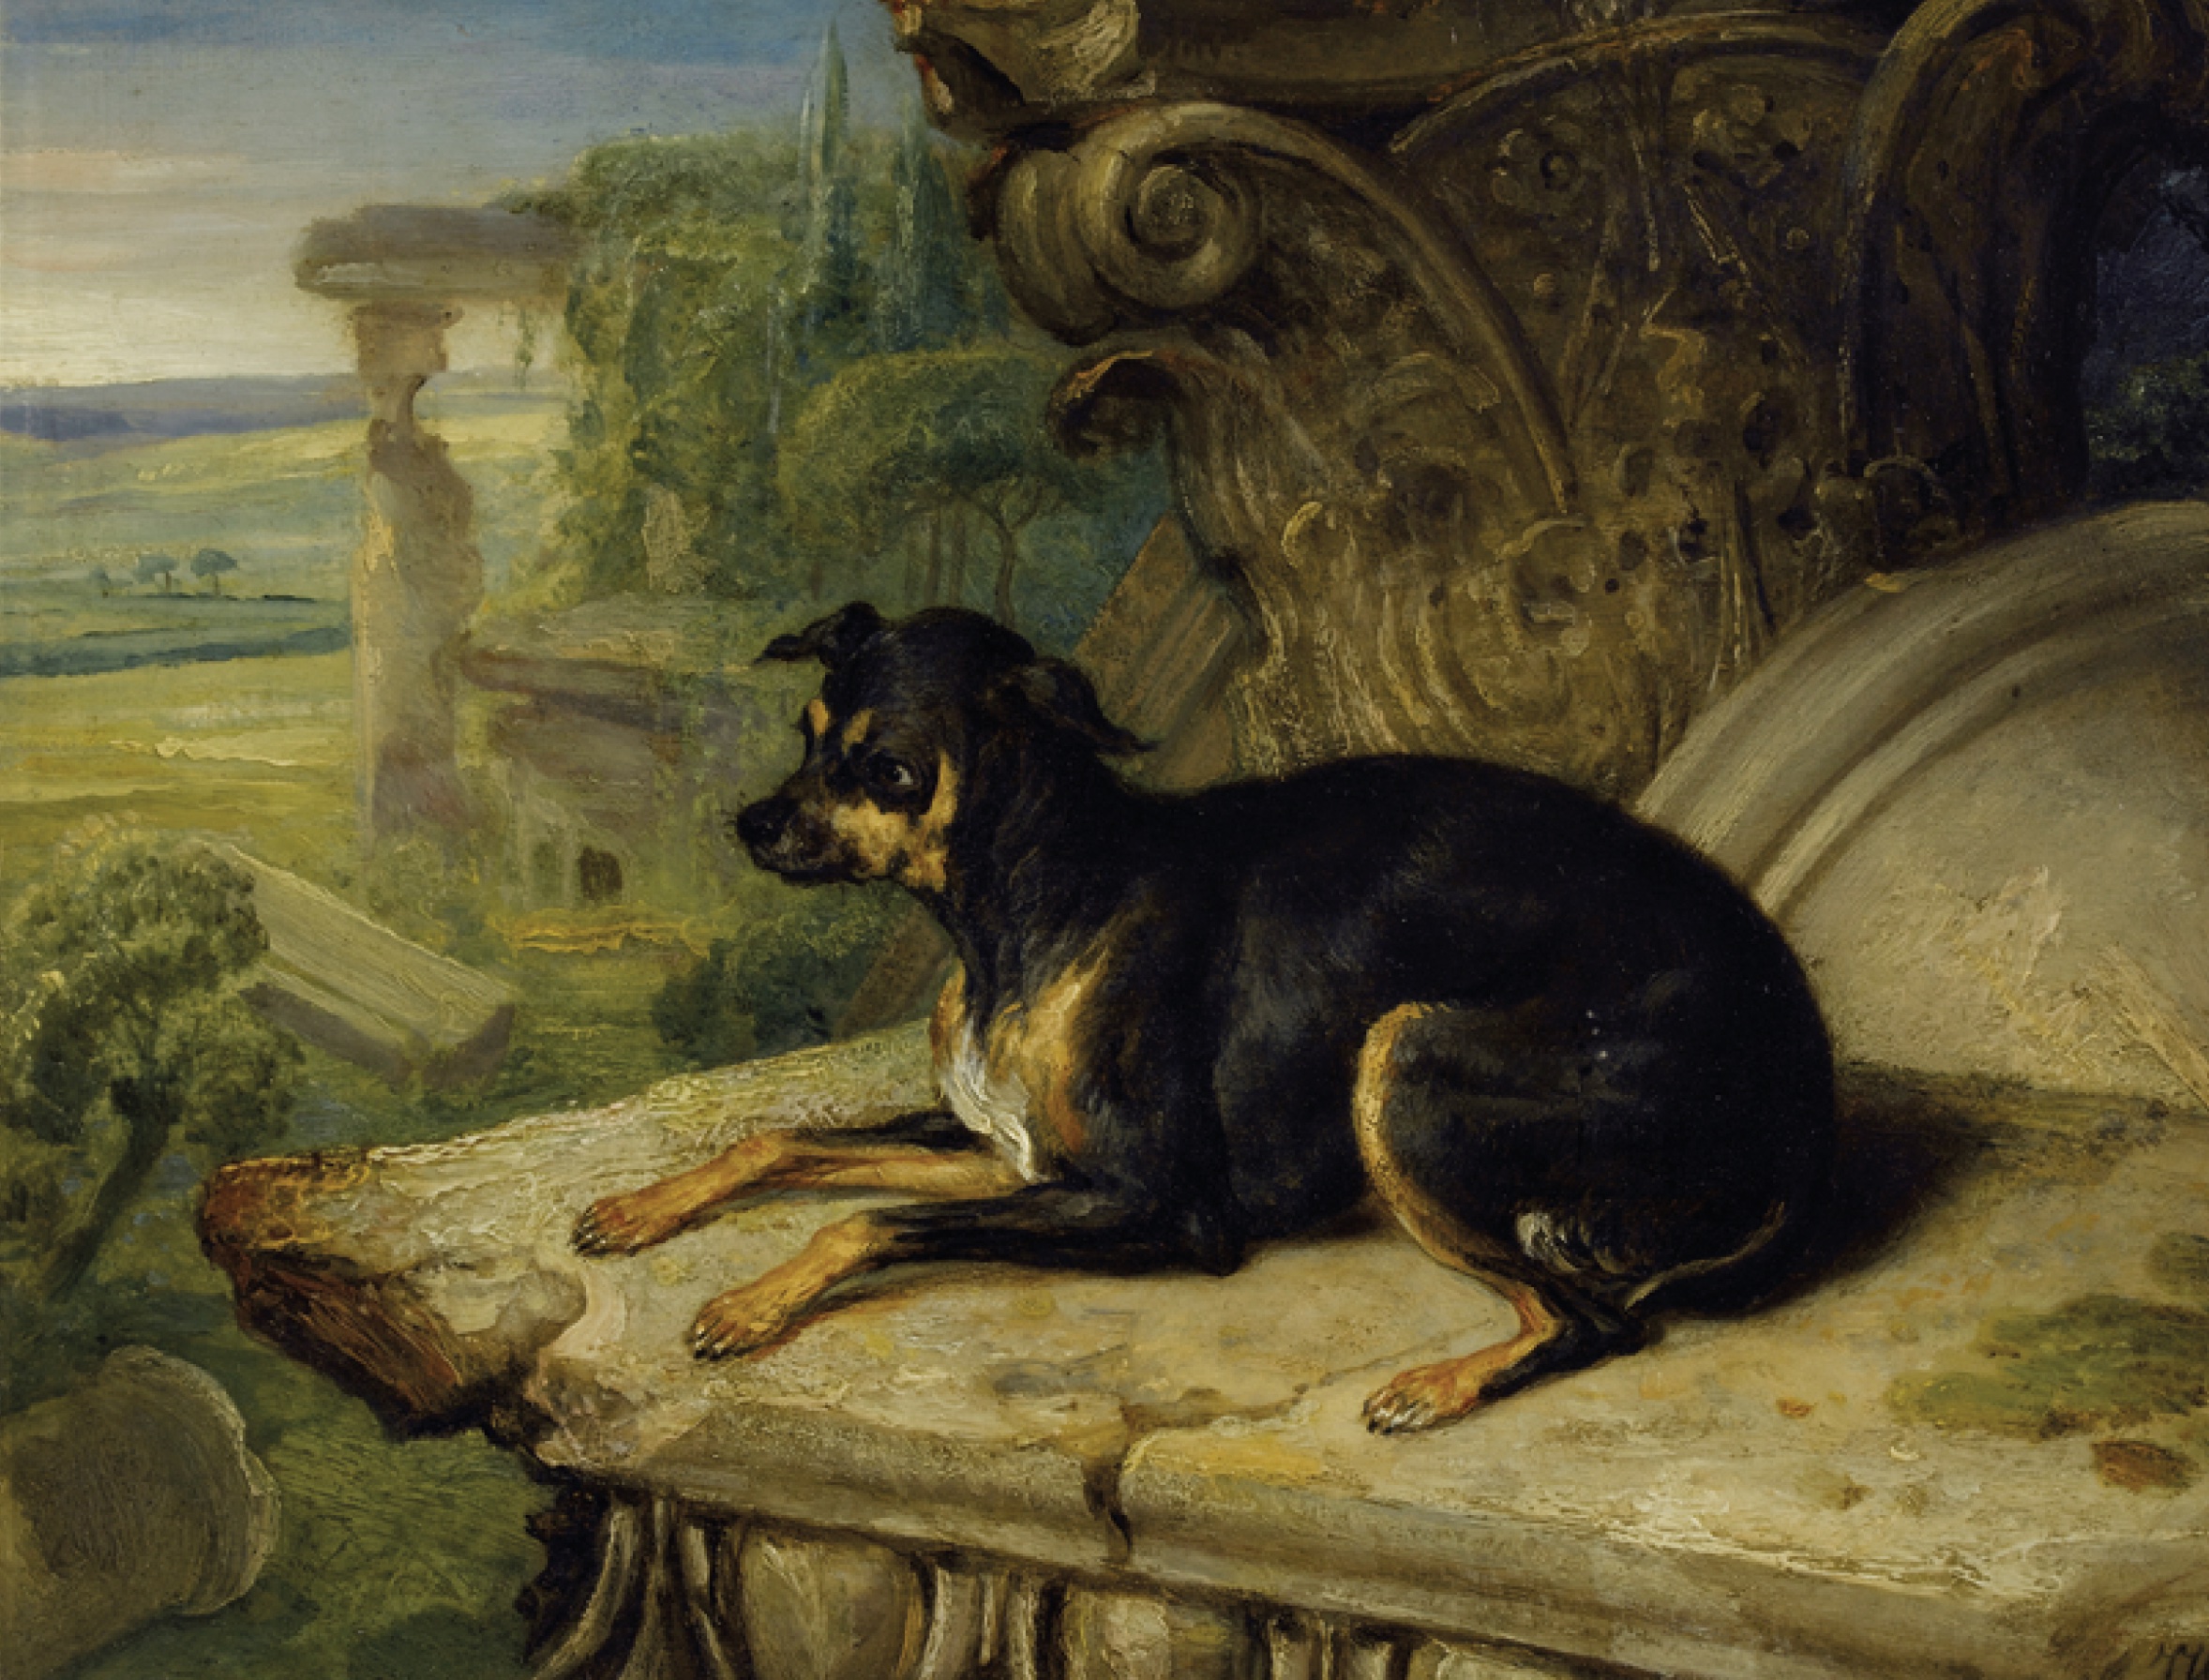 James Ward (1769-1859), Fanny, AFavourite Dog, 1822